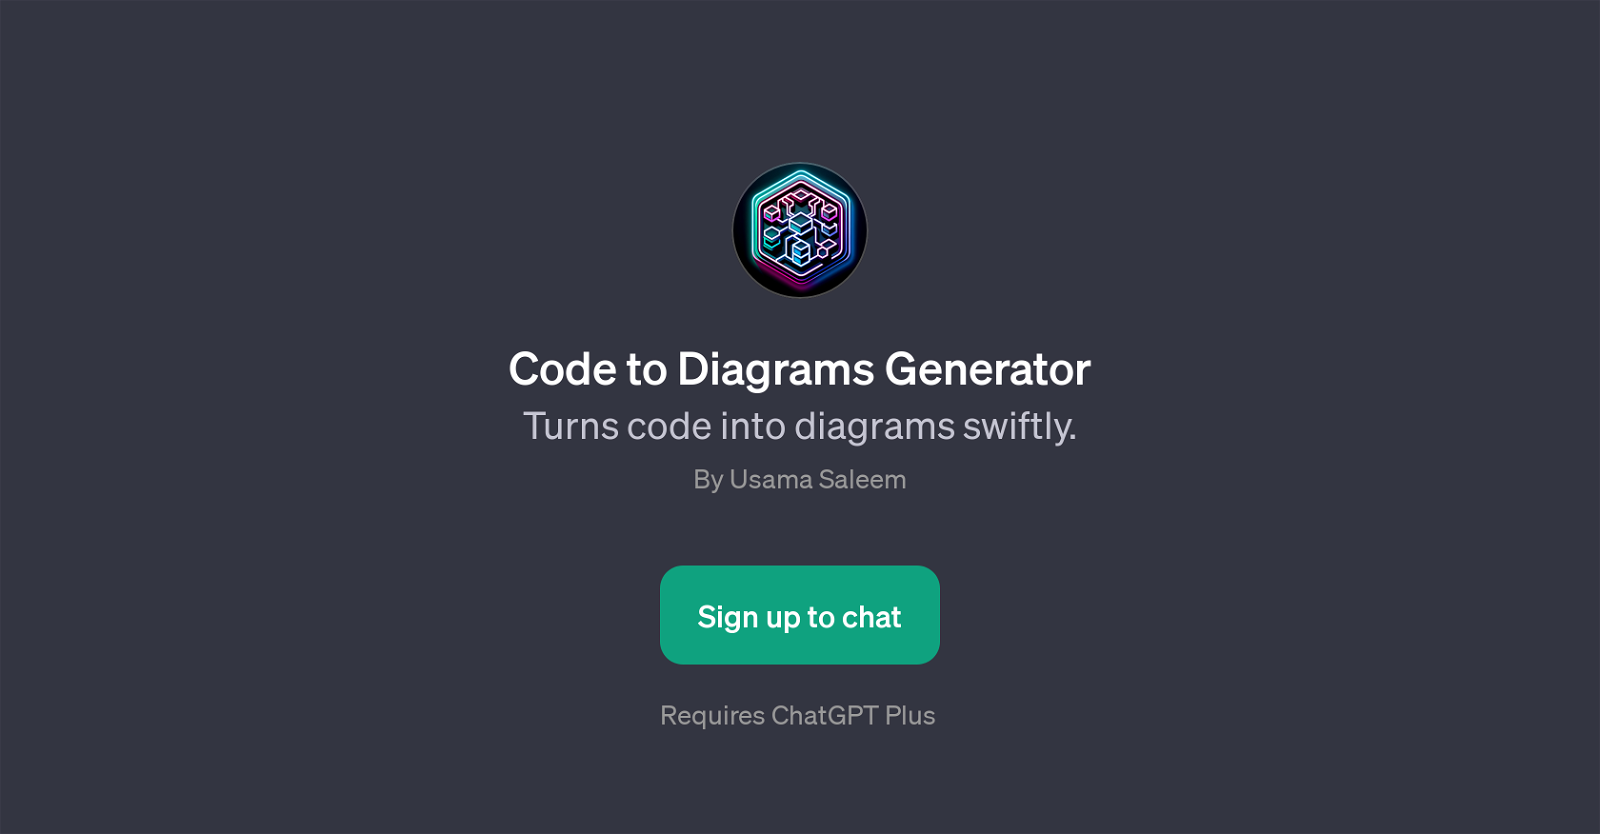 Code to Diagrams Generator website